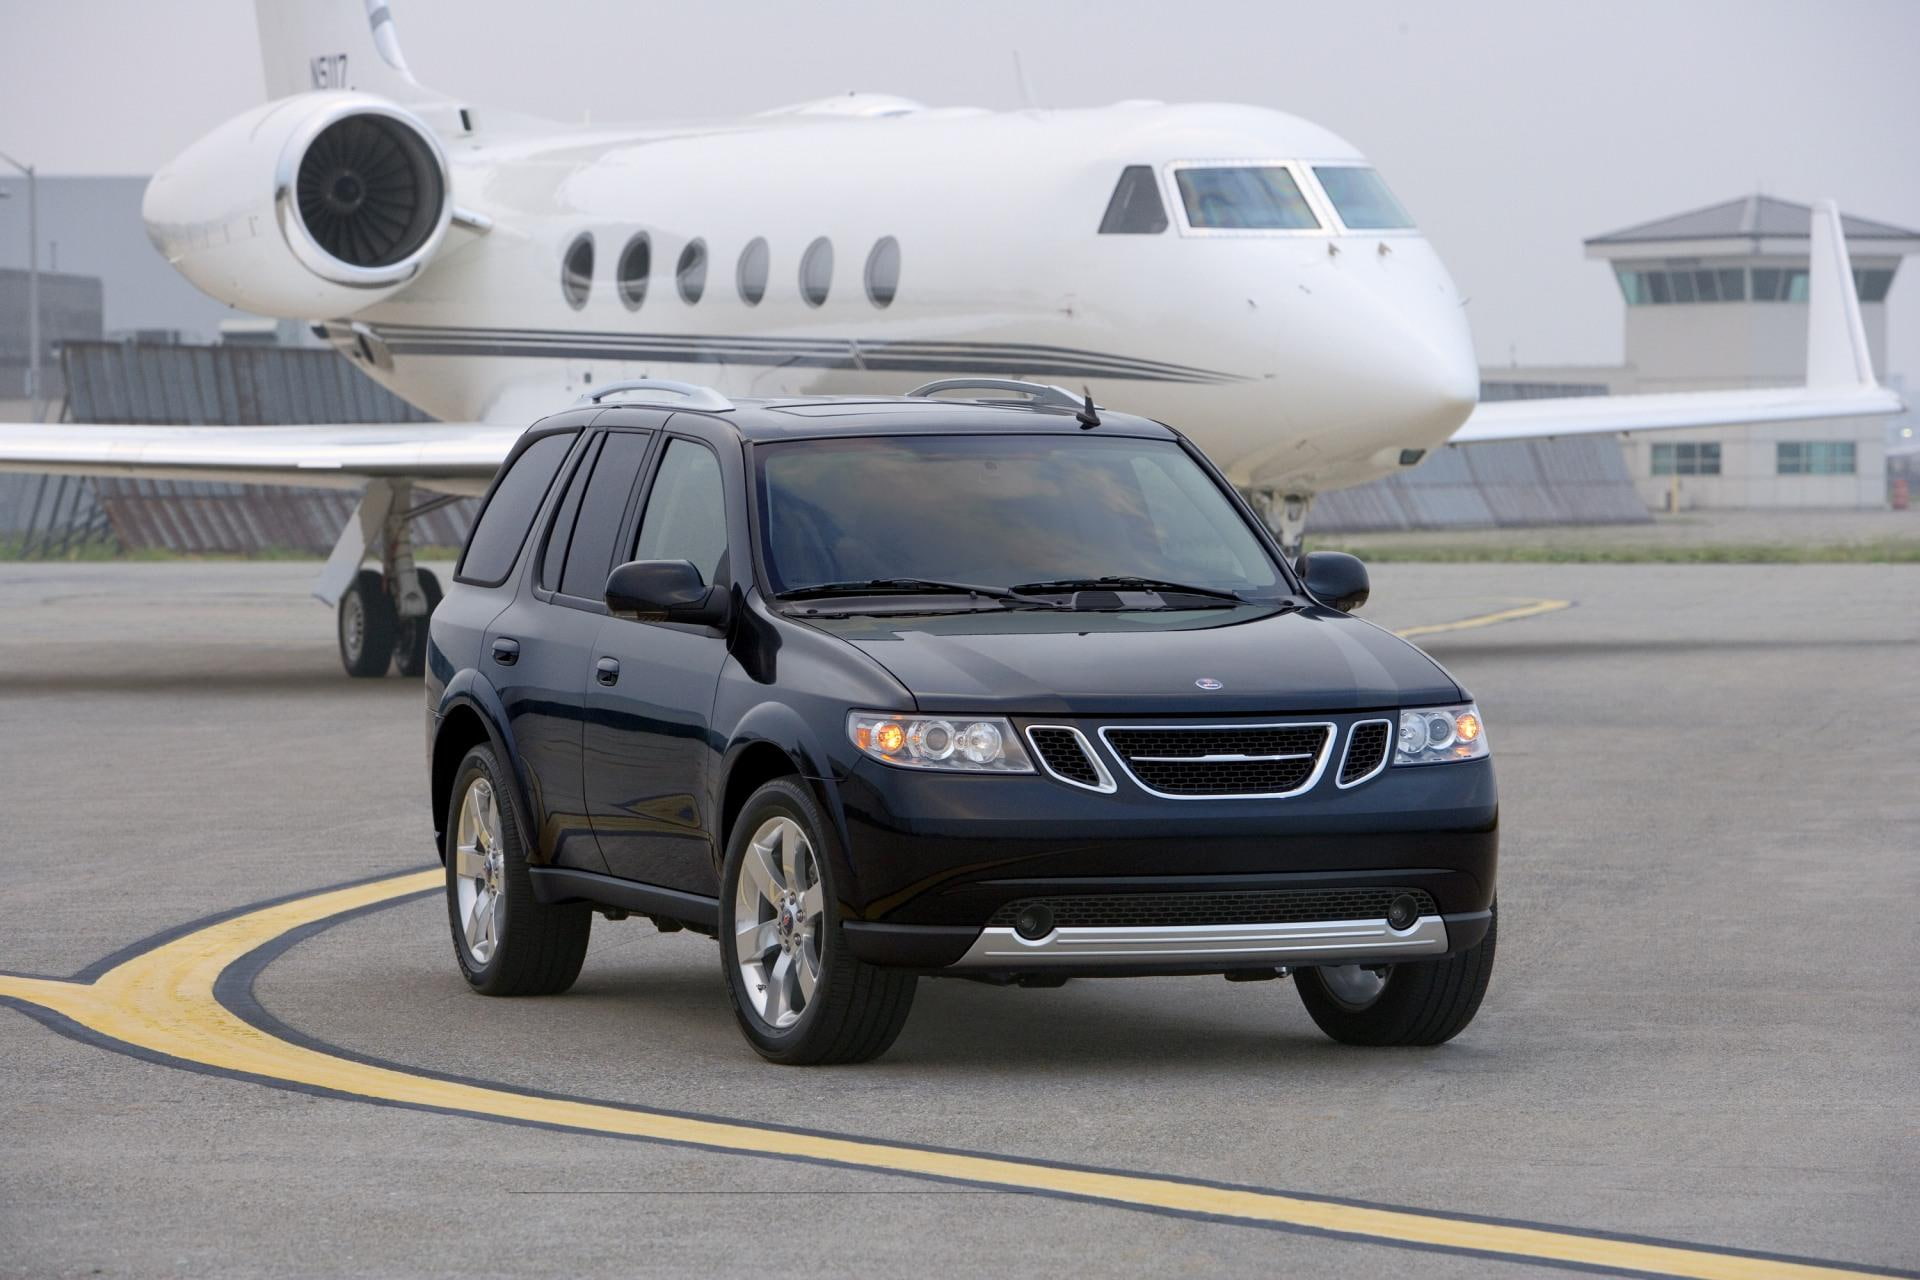 Saab 9-7X, saab 9 7x 2009_, car, transportation, mode of transportation